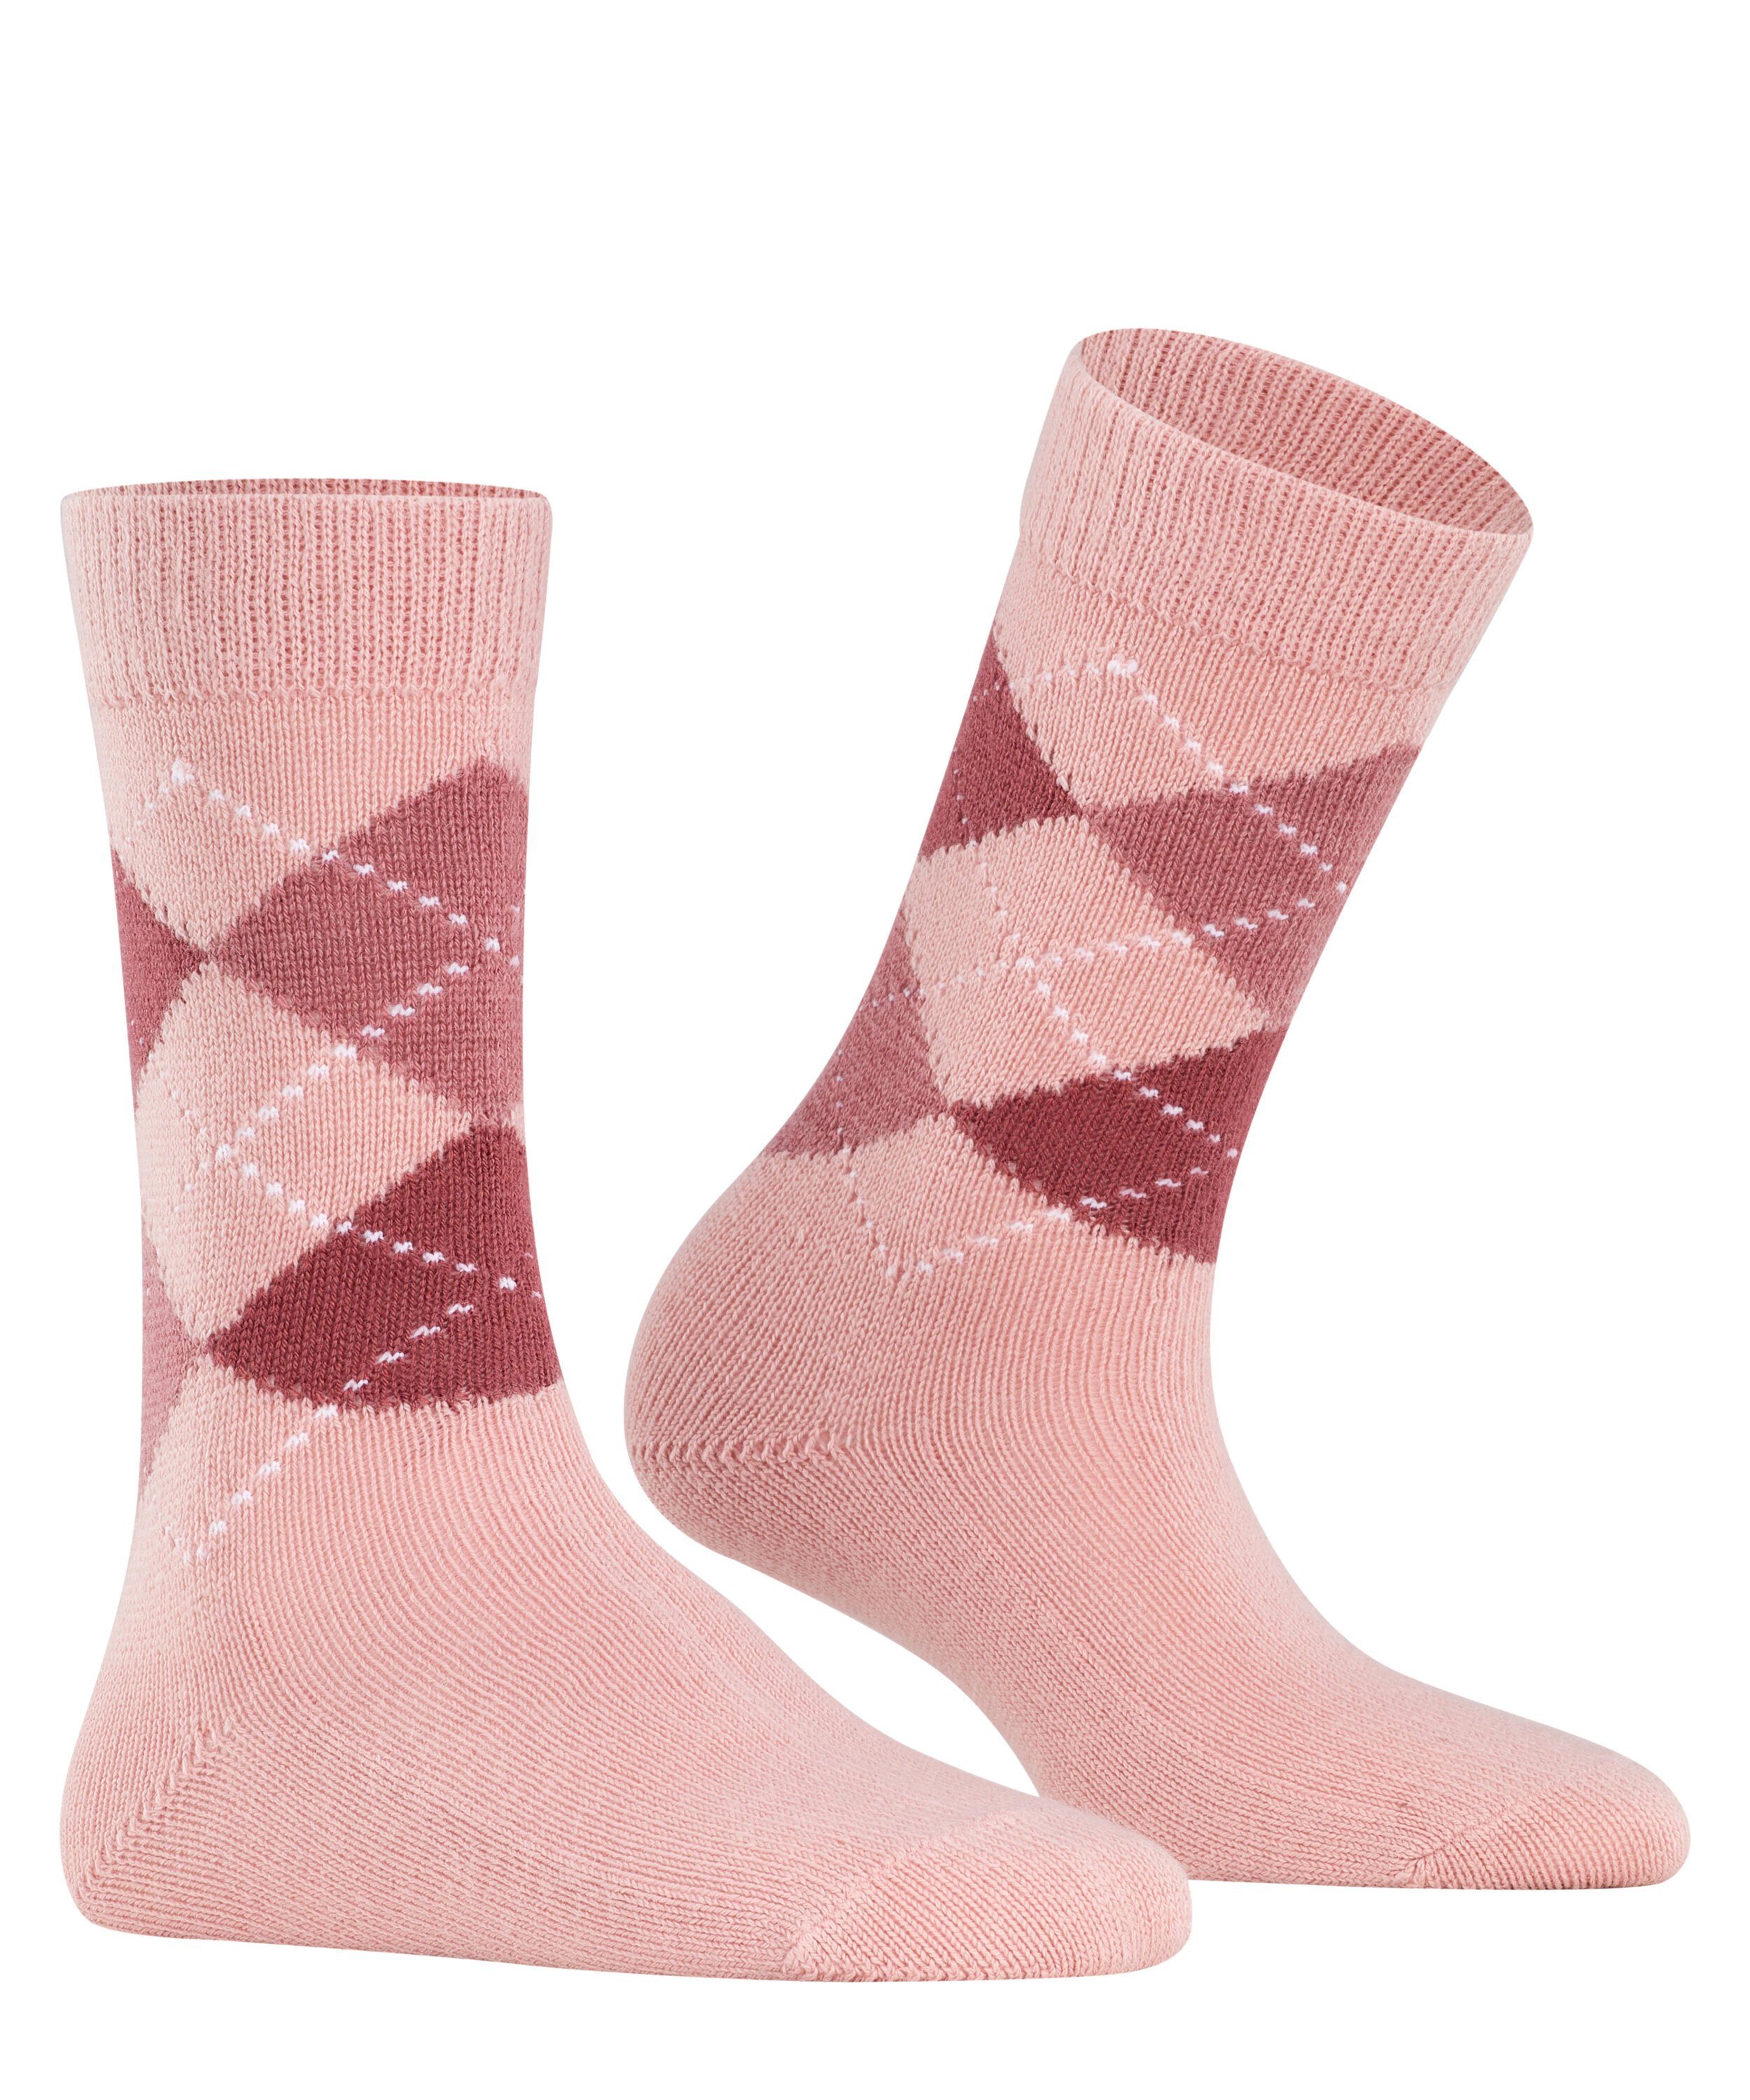 (1-Paar) Socken (8642) Burlington Whitby primrose